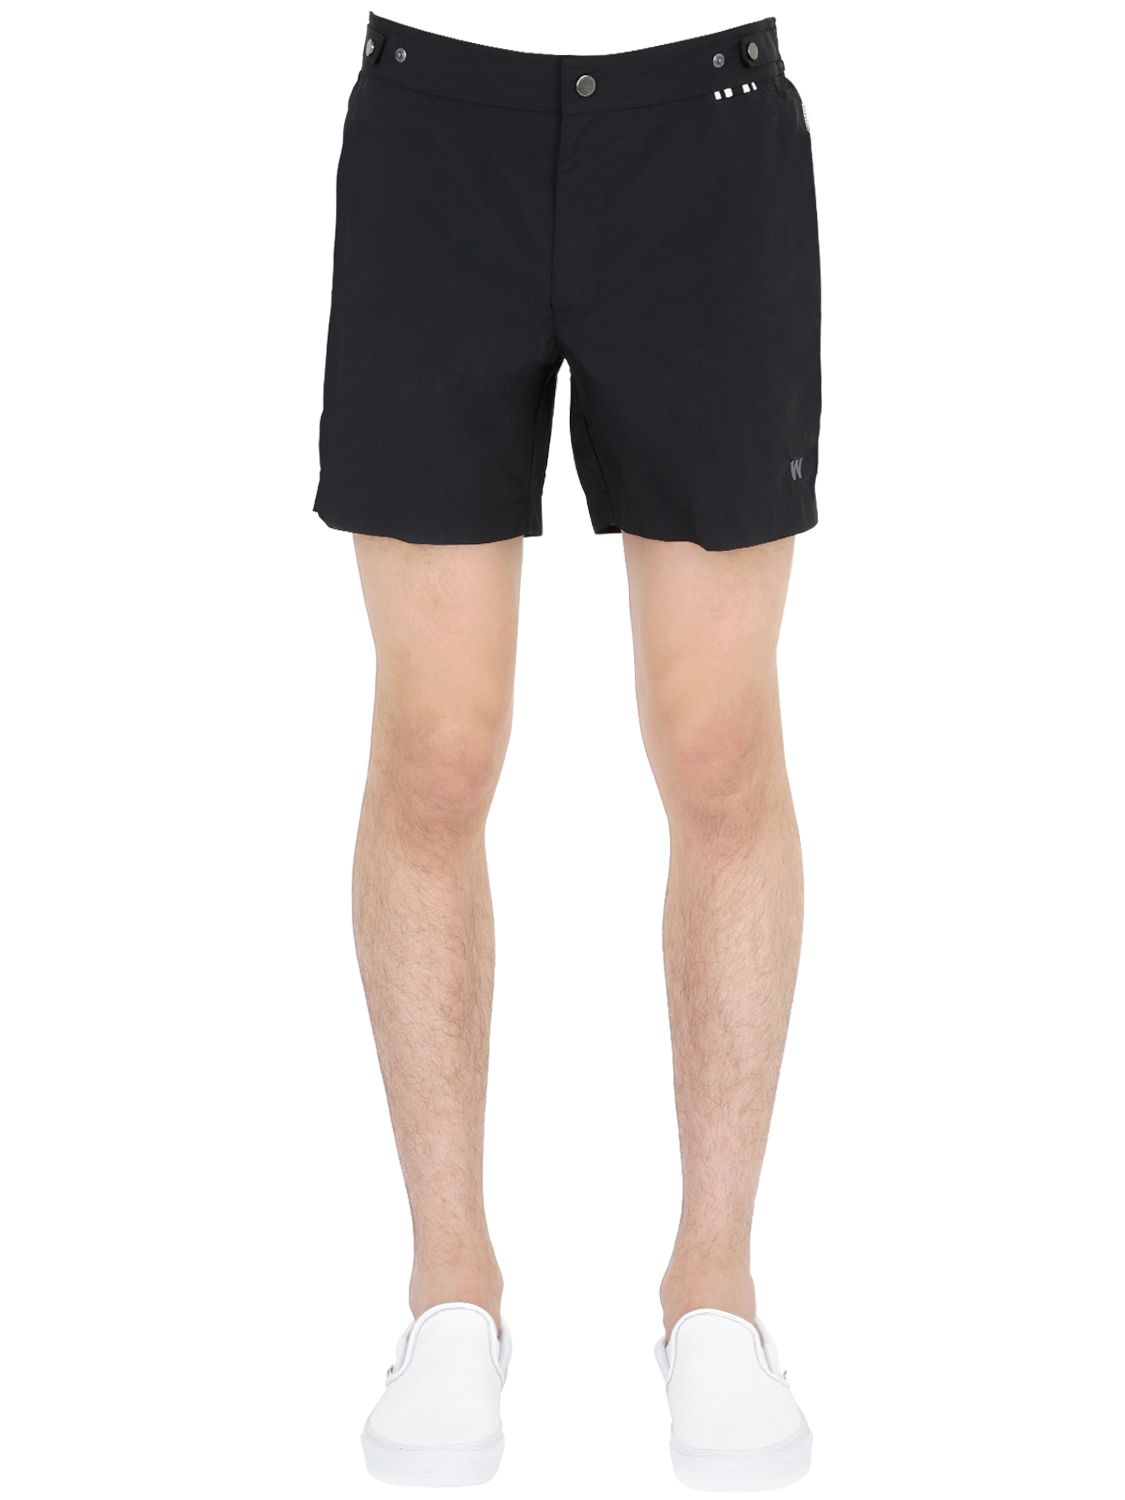 Download Lyst - Danward Solid Quick Drying Swim Shorts in Black for Men